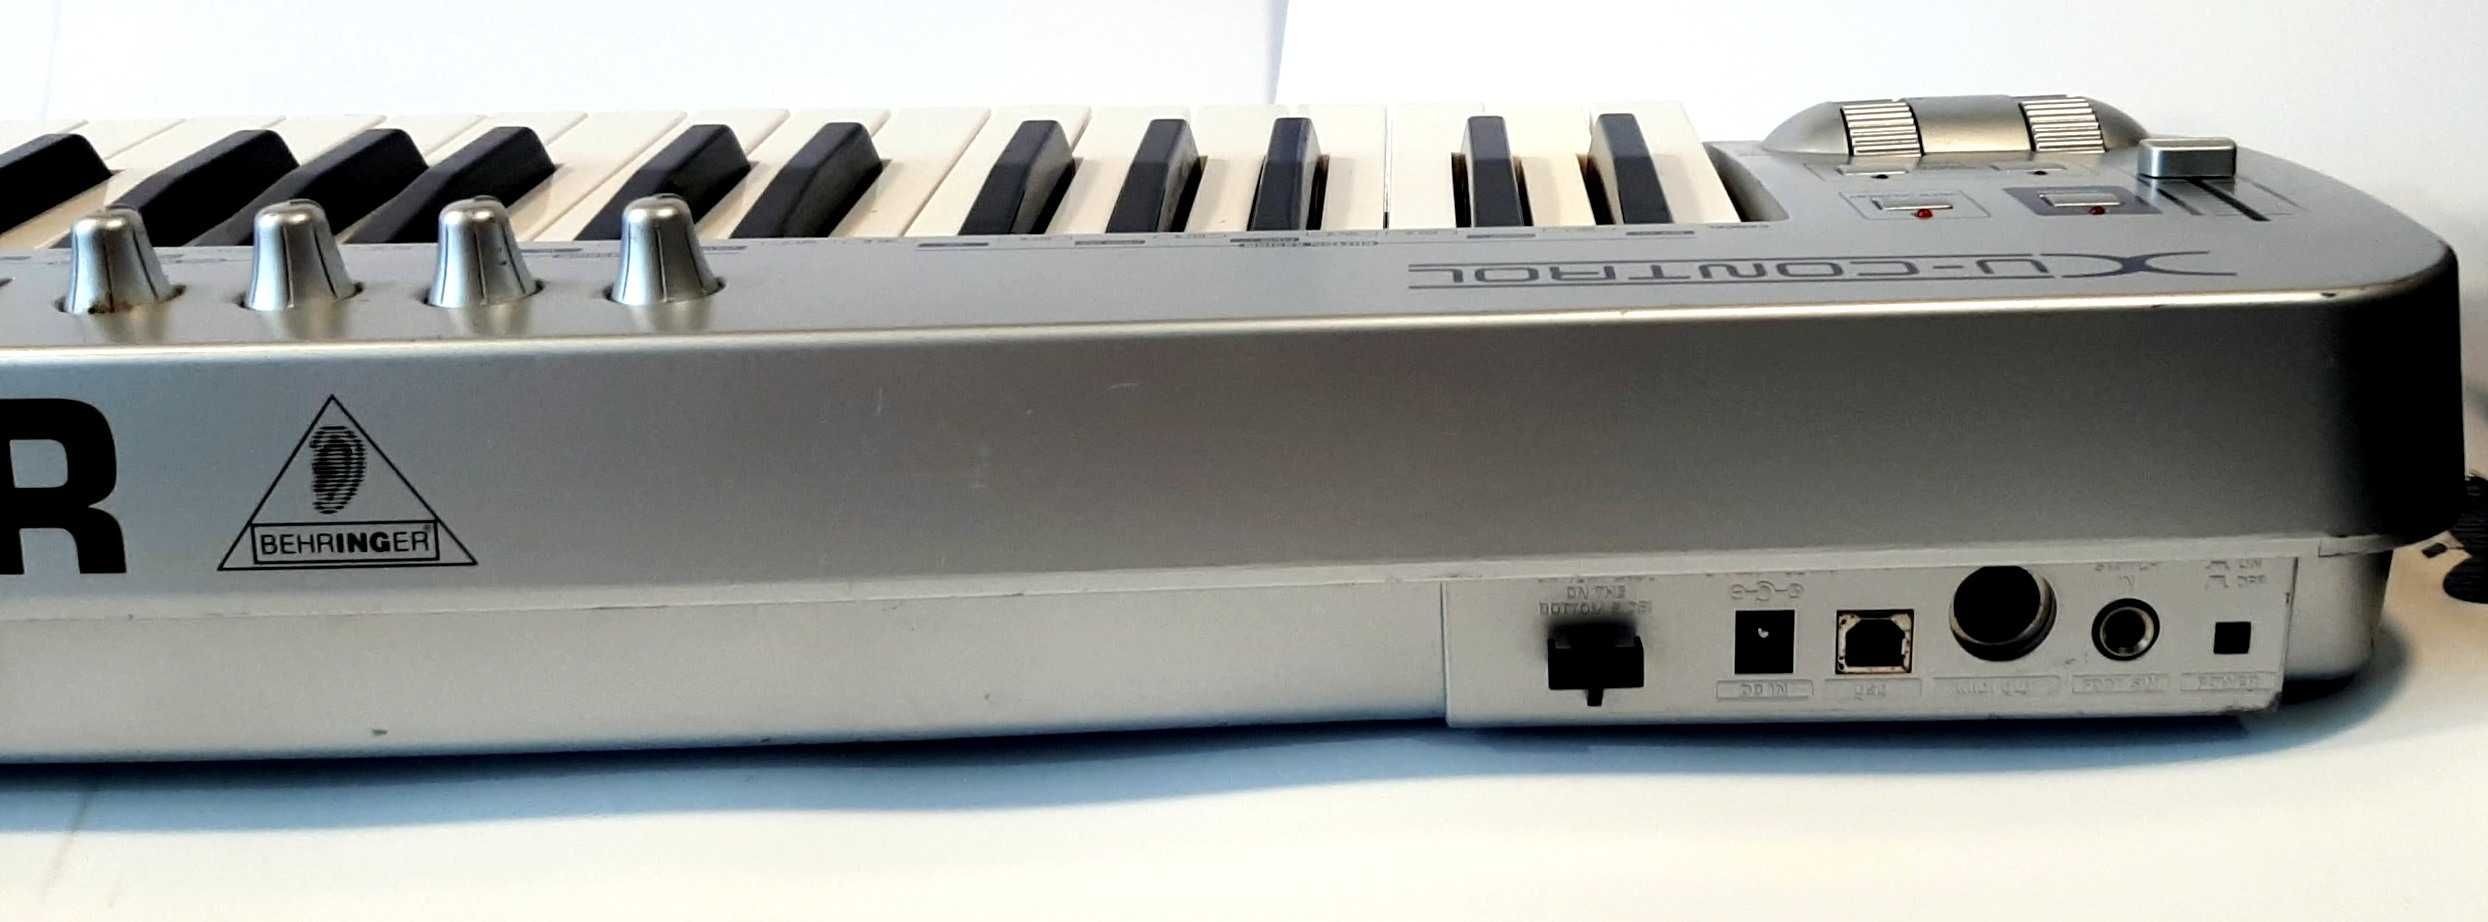 Синтезаторная клавиатура BEHRINGER U-CONTROL UMX610 MIDI USB 61 клавиш